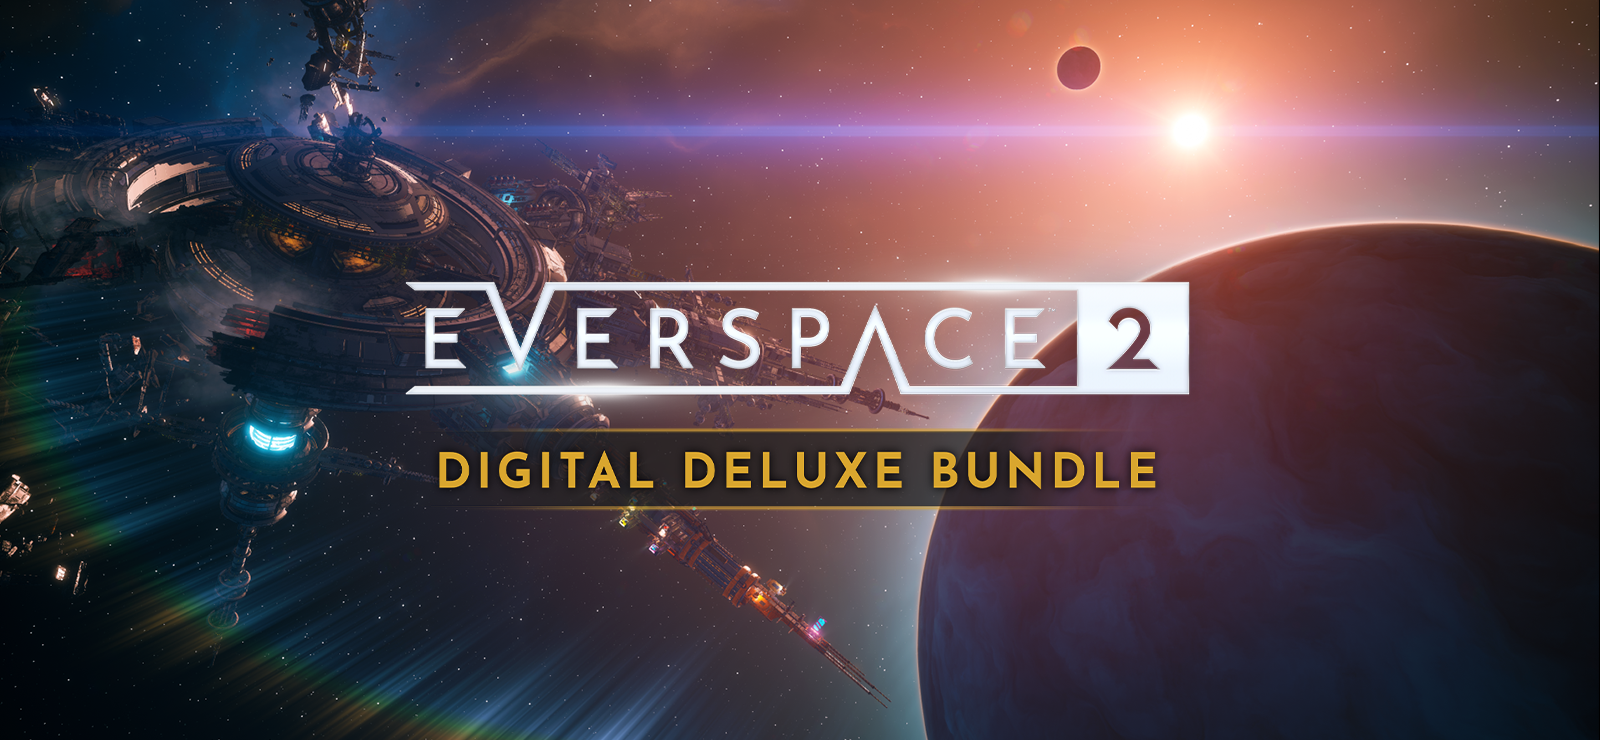 EVERSPACE™ 2 Digital Deluxe Bundle